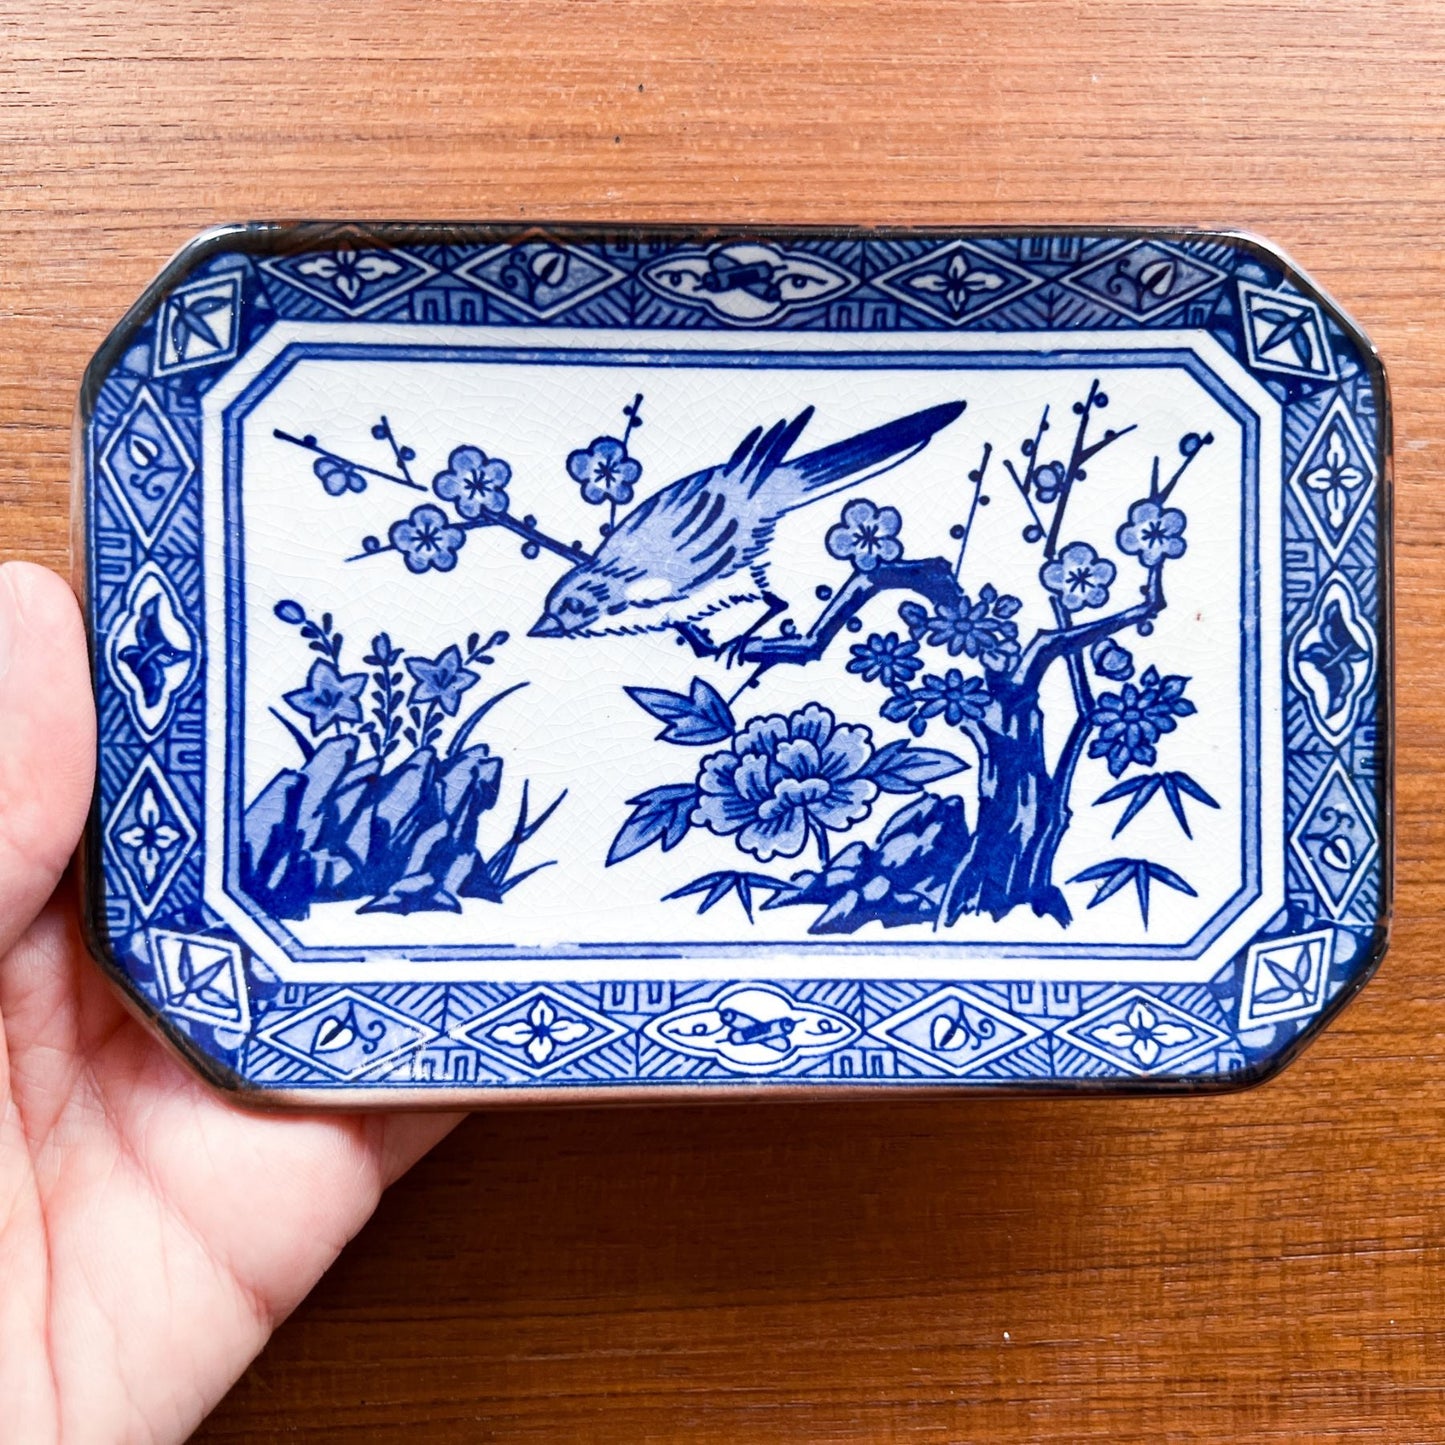 Vintage Arita Porcelain Square Plates SetNagamochi Shop